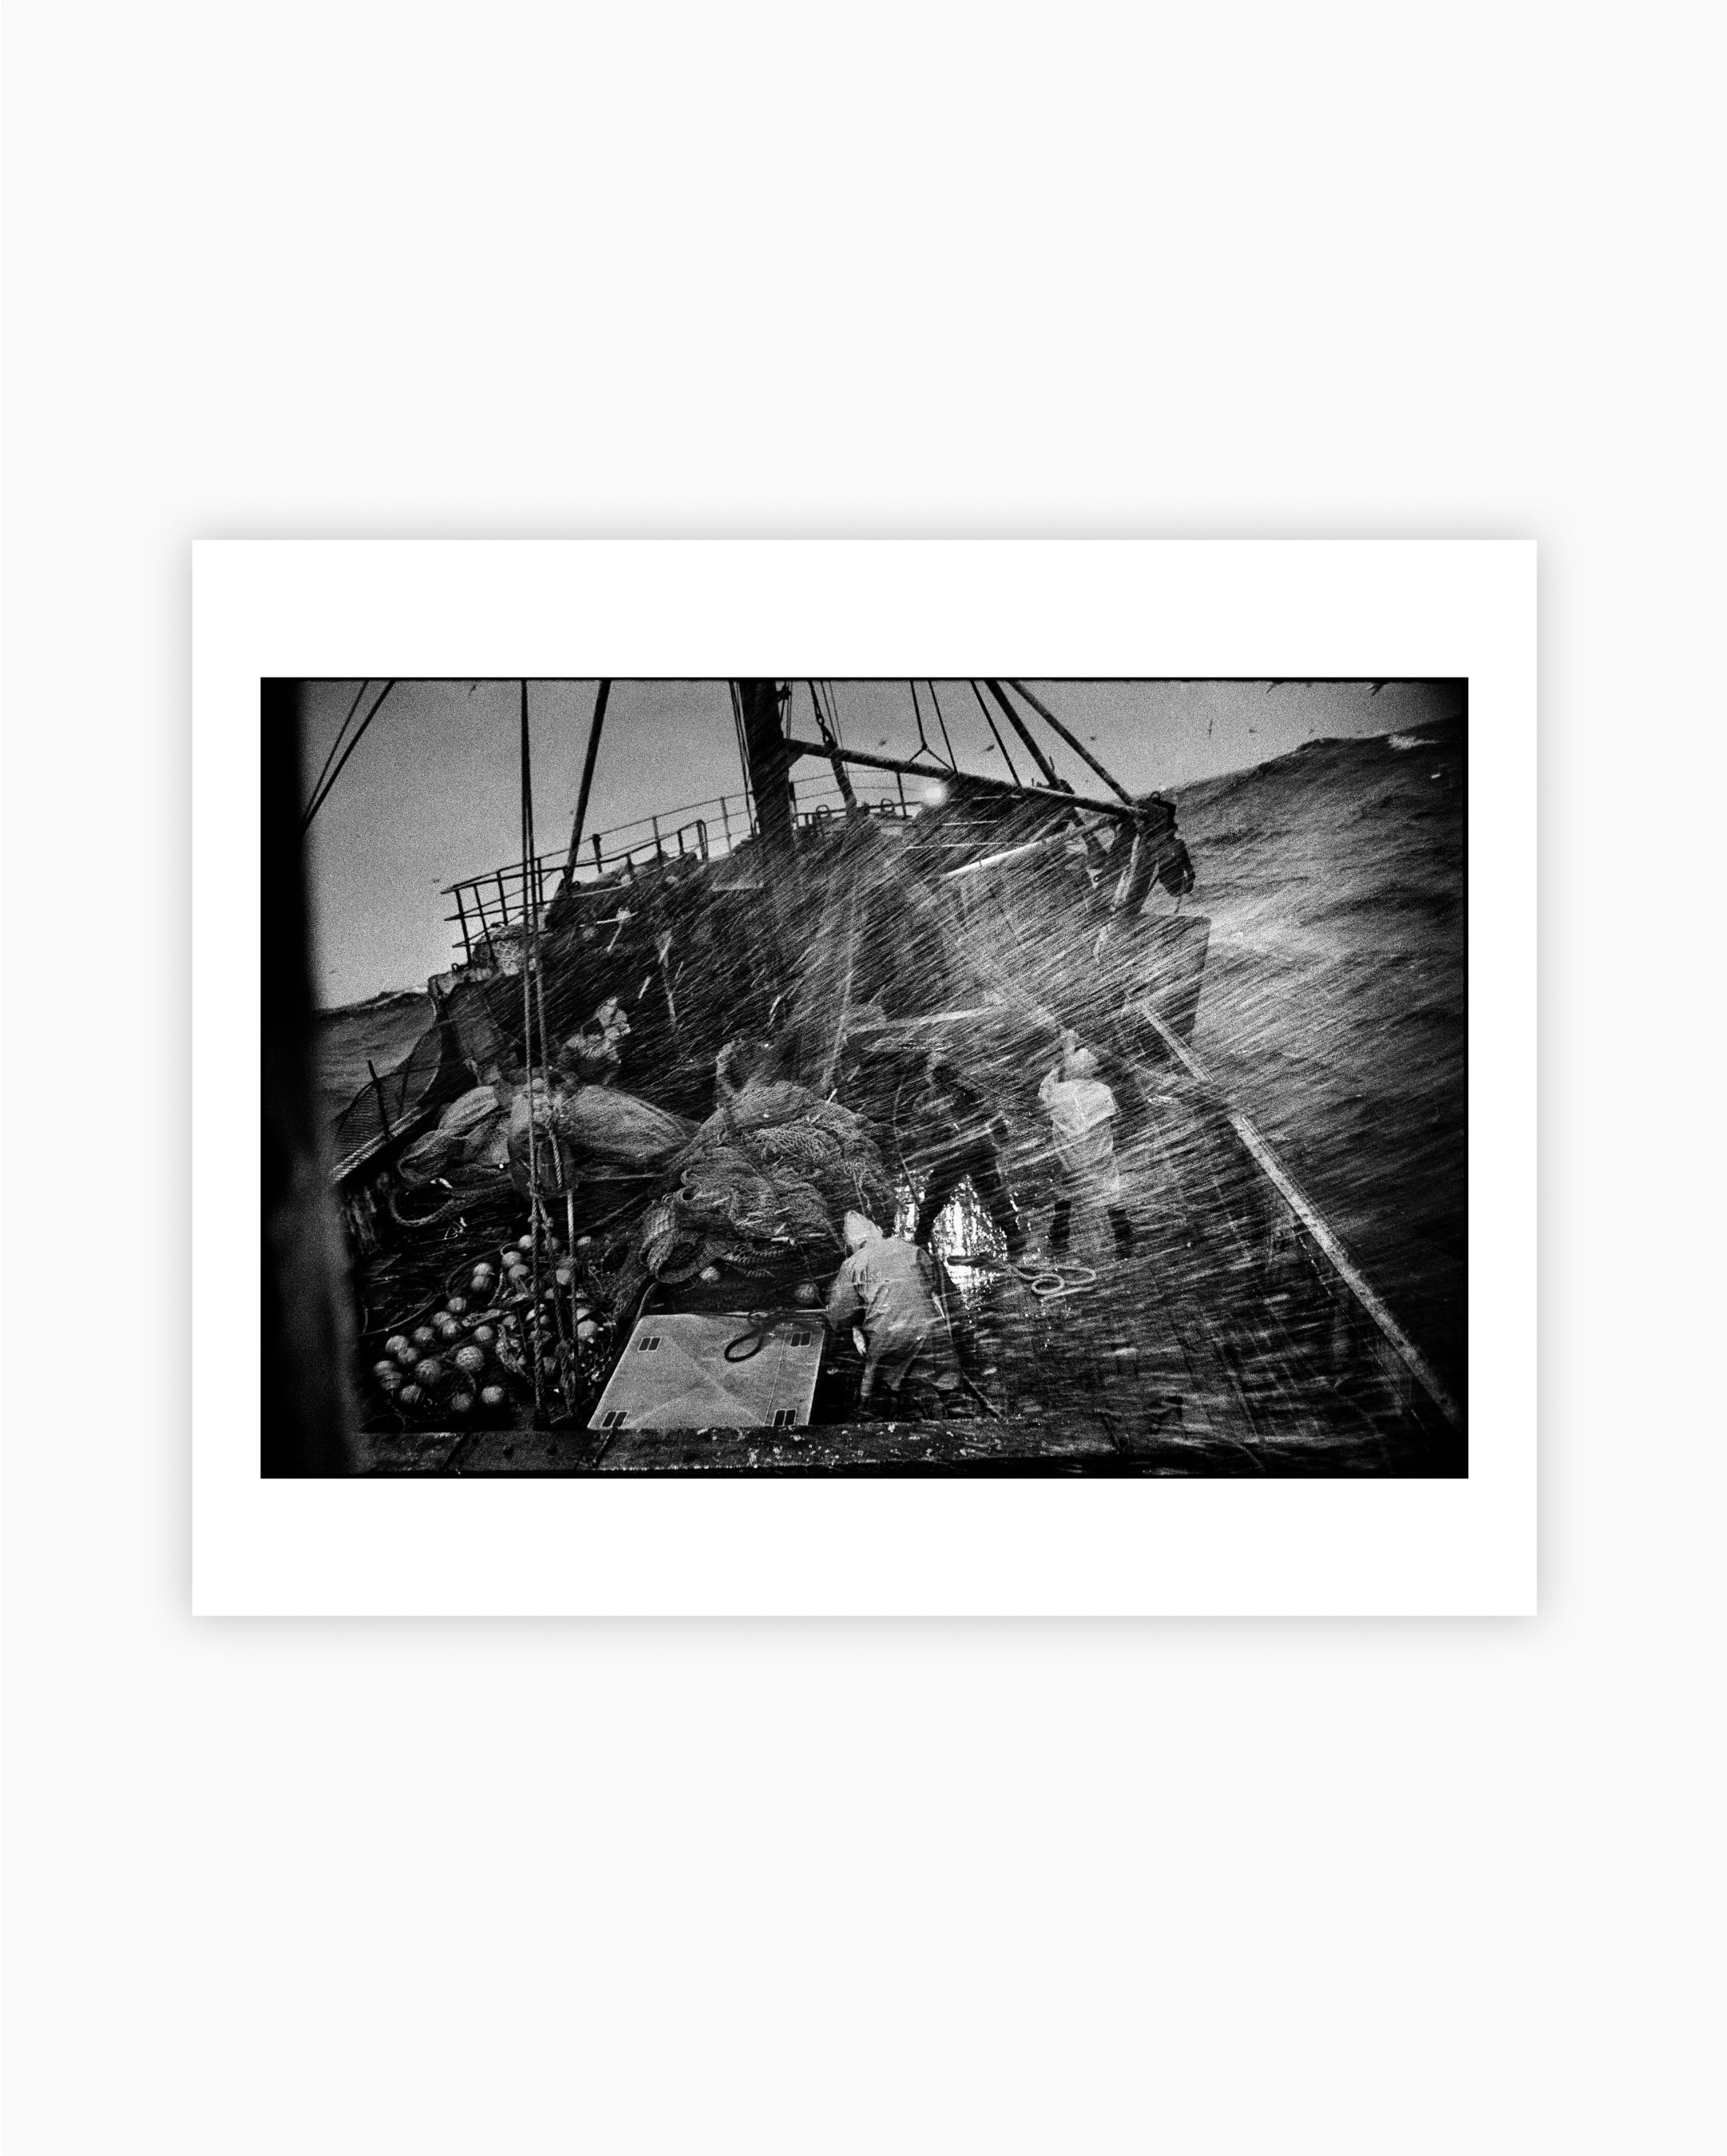 Magnum Editions: On board the Spanish trawler “Rowanlea”, 1998